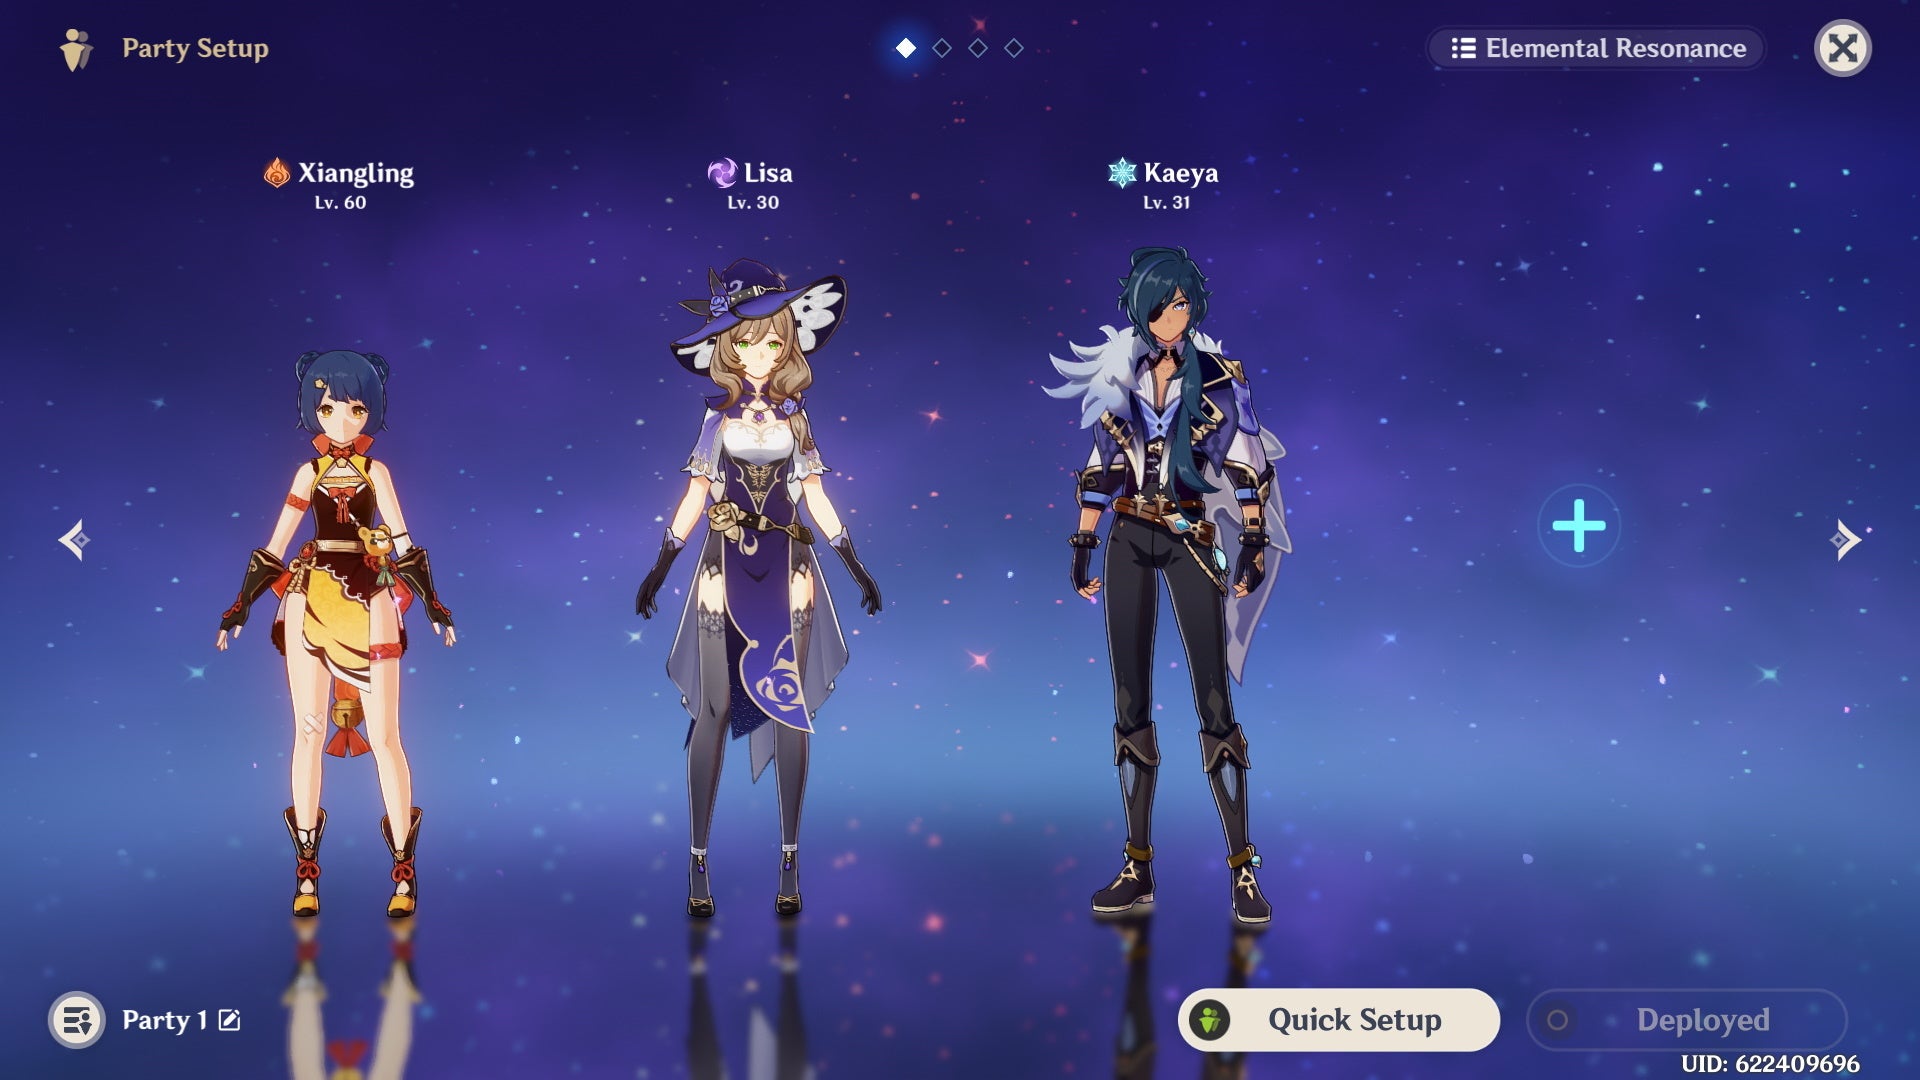 Dori team comps: A menu page showing Xiangling, Lisa, and Kaeya